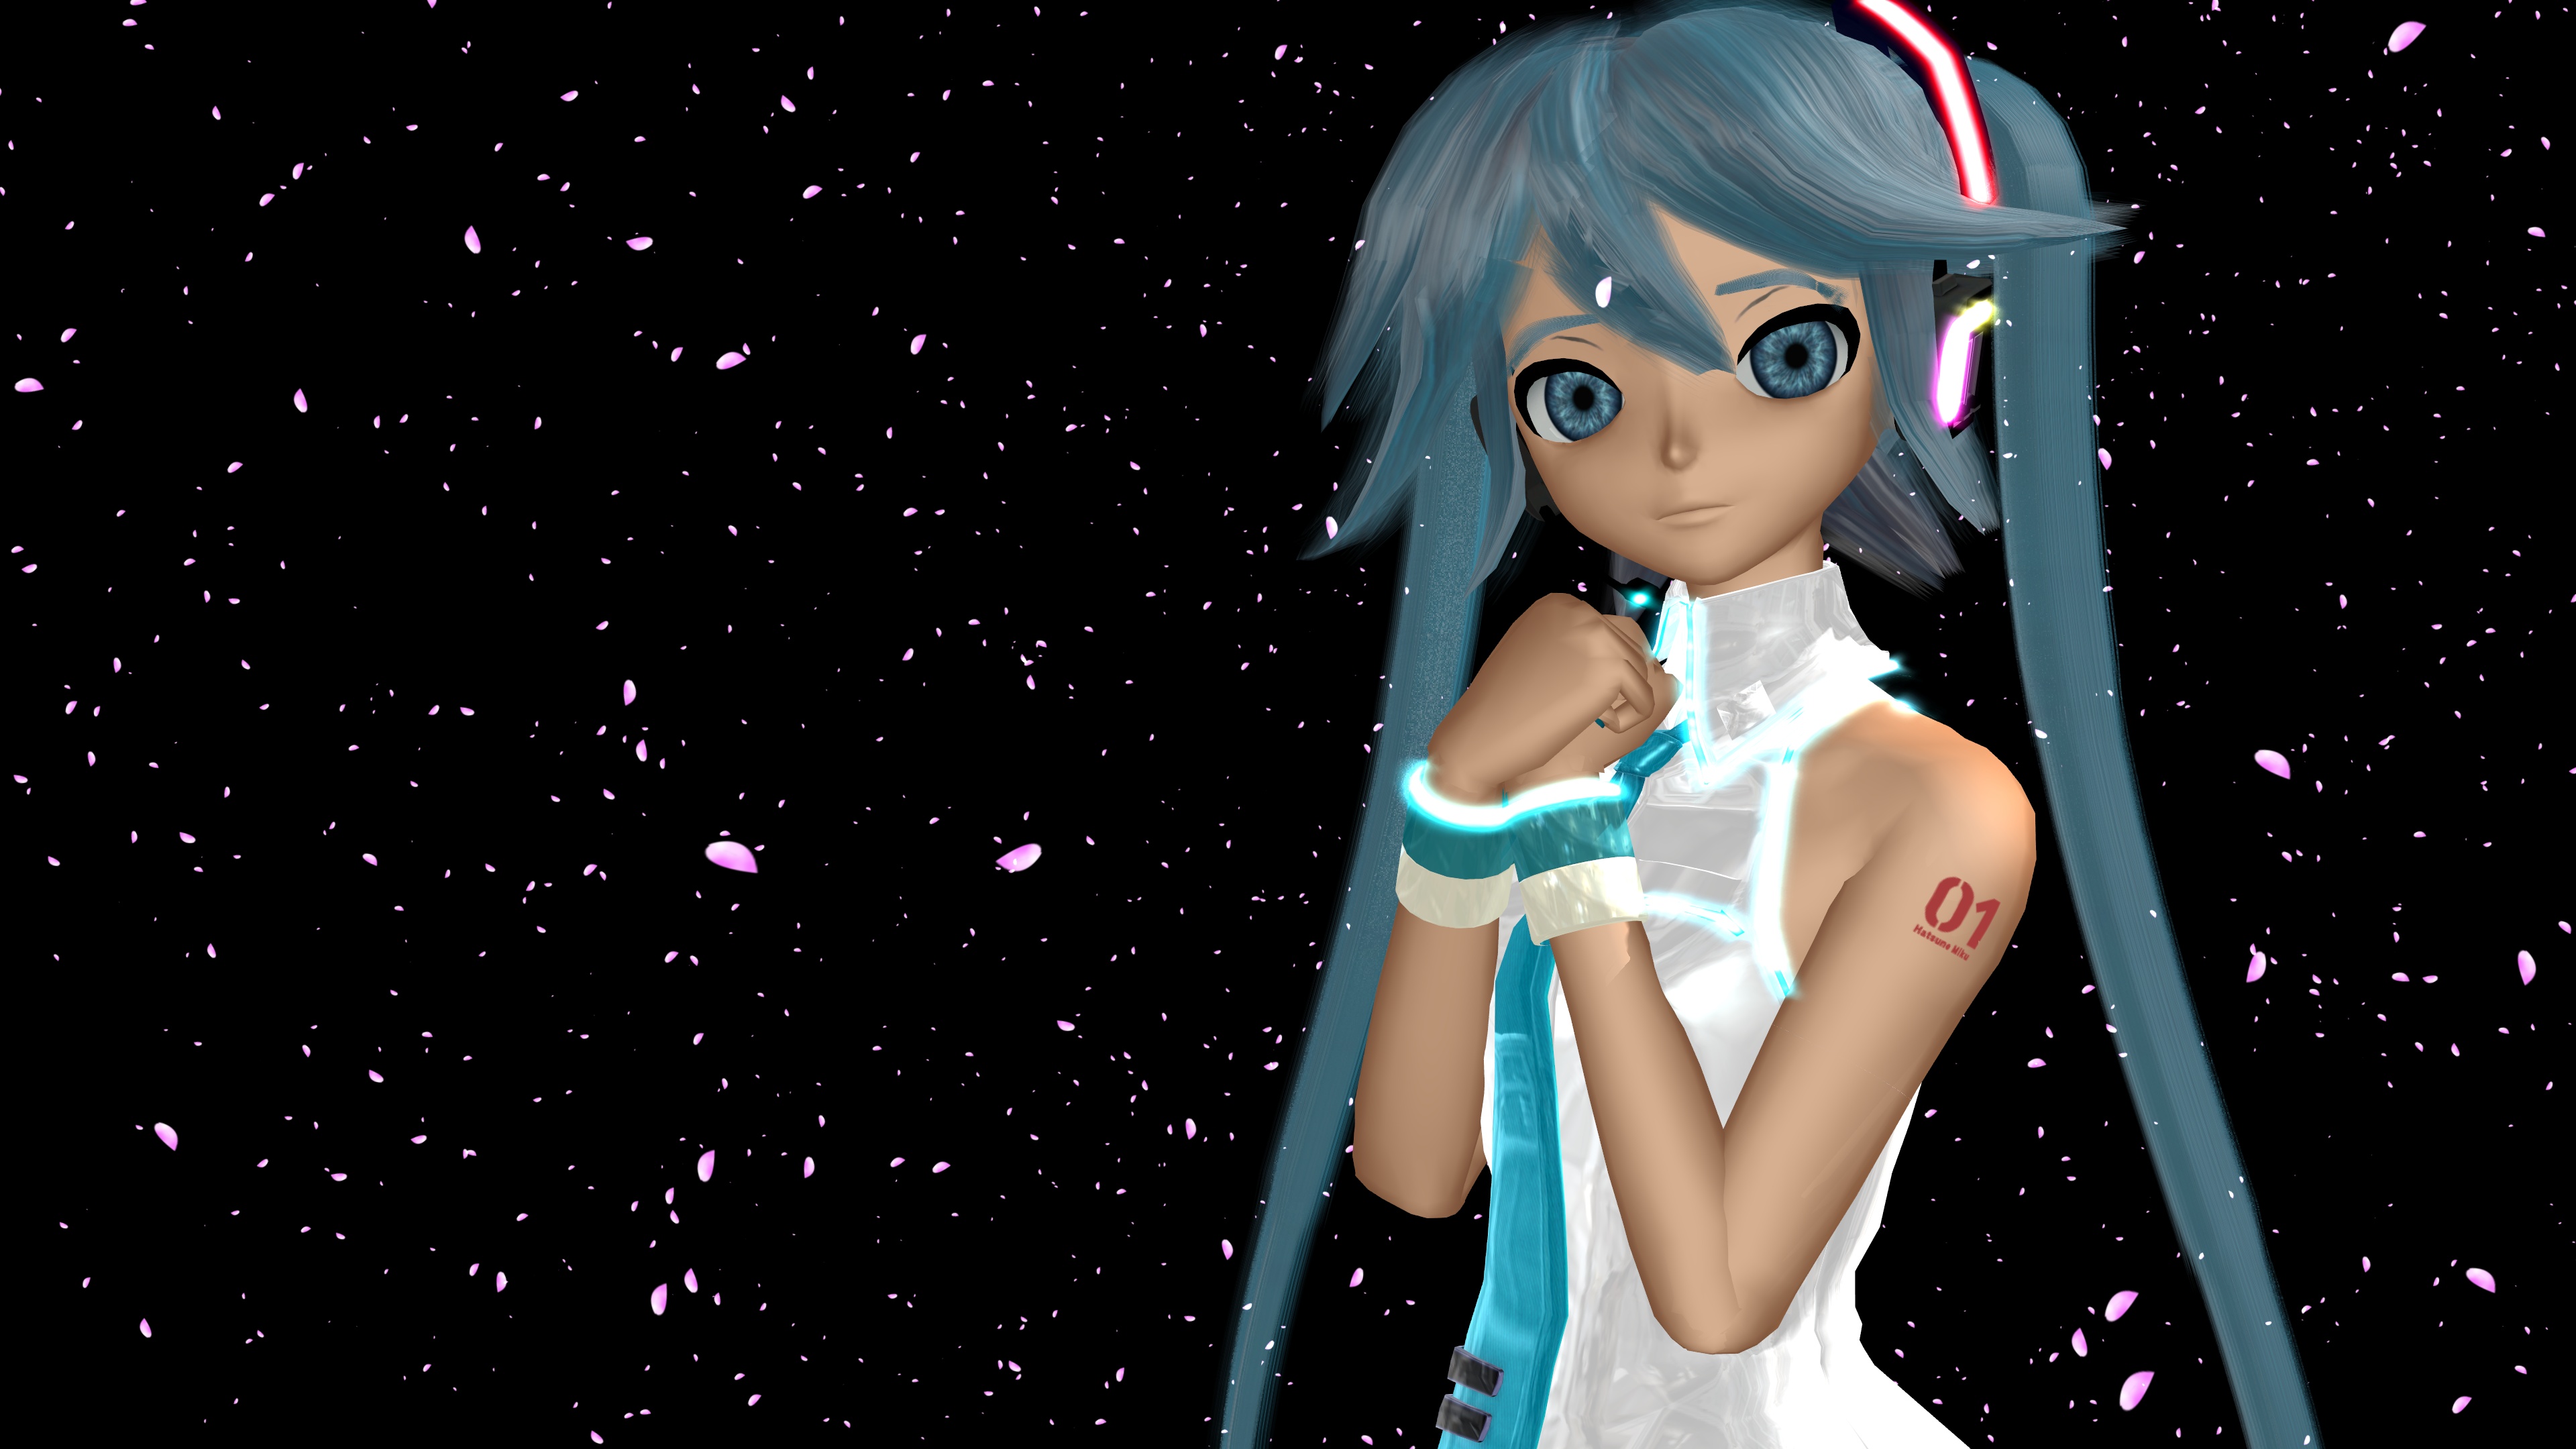 Descarga gratis la imagen Sakura, Vocaloid, Ojos Azules, Animado, Pelo Azul, Hatsune Miku en el escritorio de tu PC